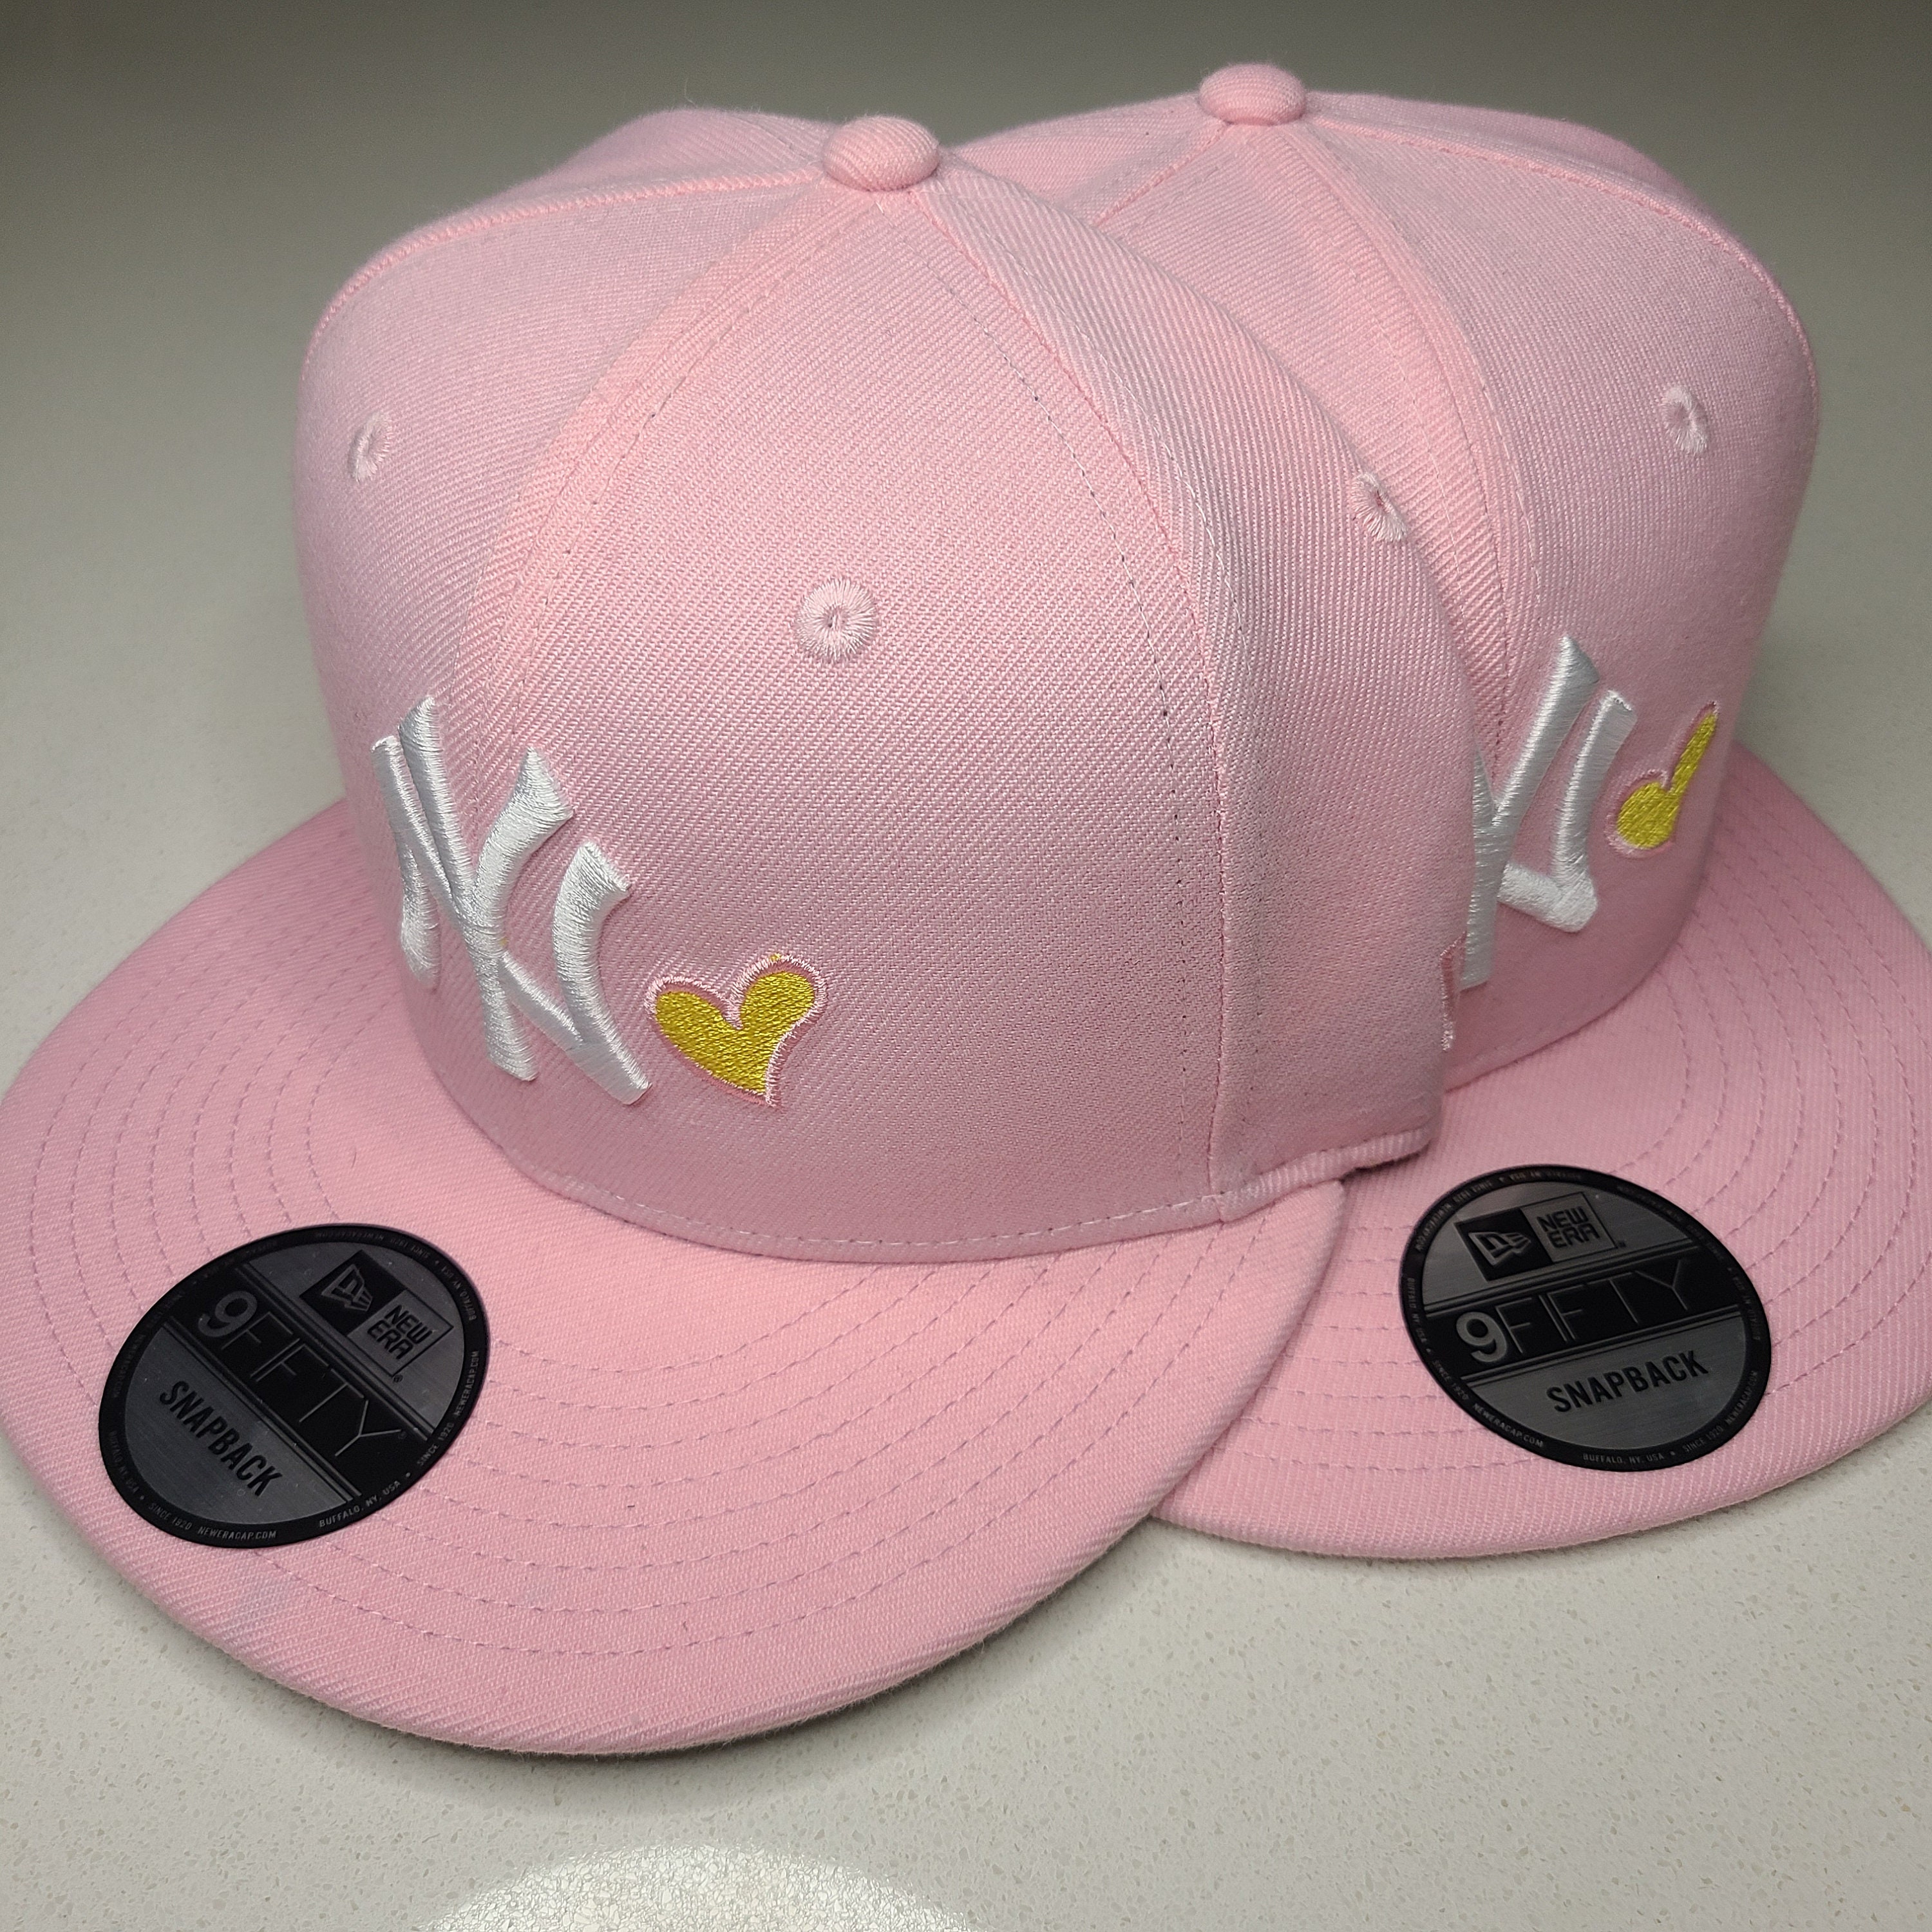 New York Yankees New Era Pink Gray UV 9FIFTY Snapback Hat 